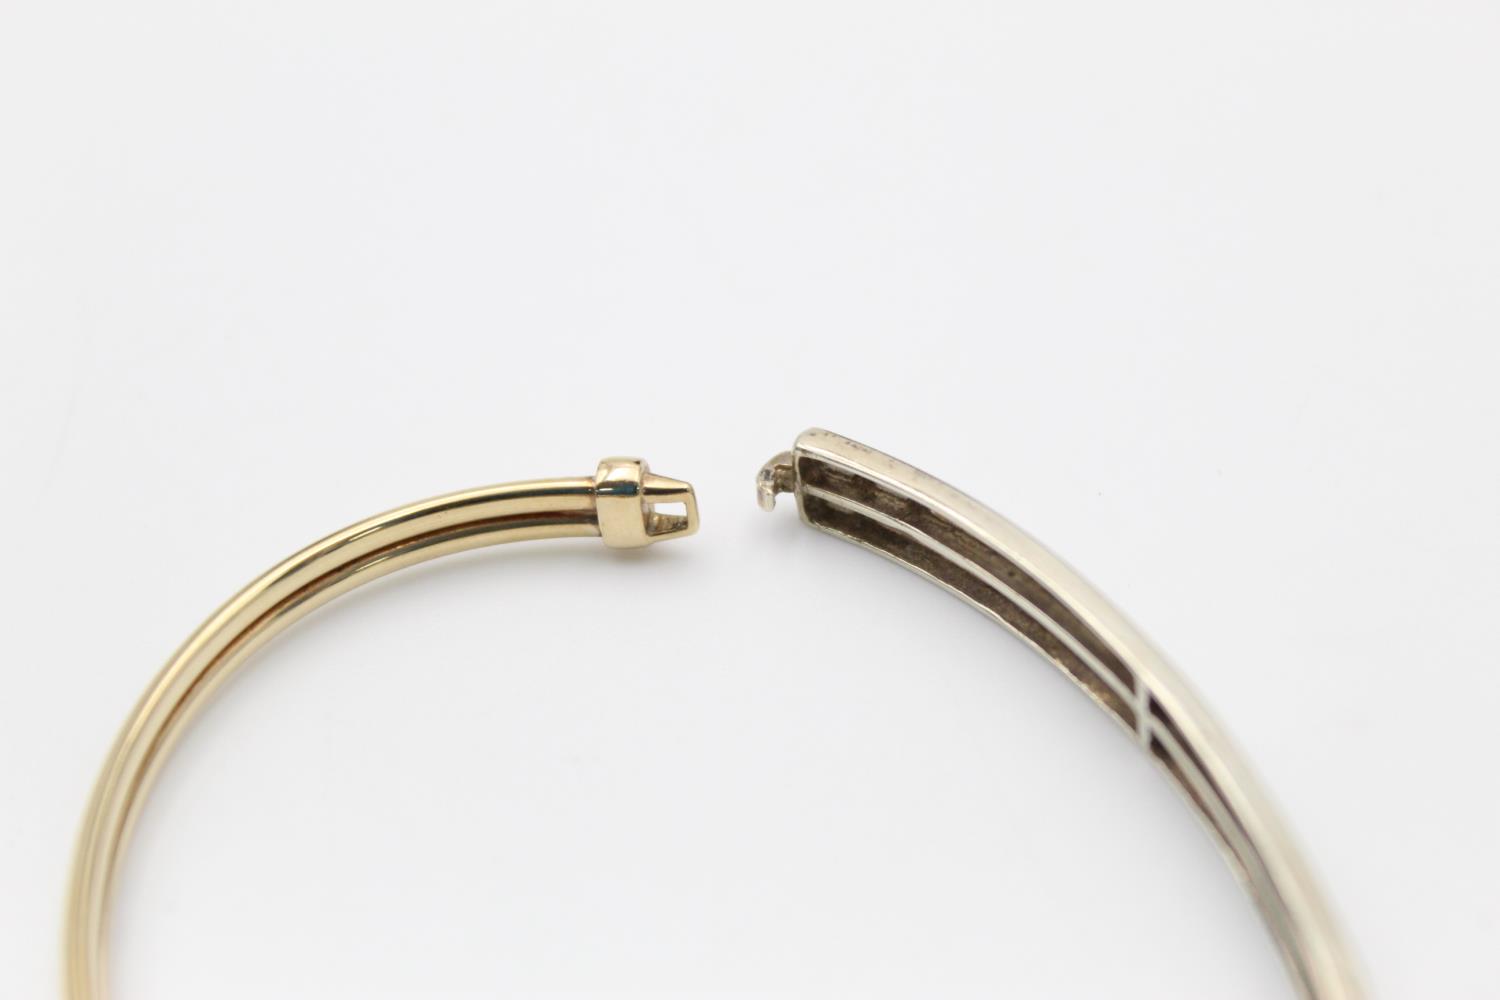 9ct gold two-tone cutwork bangle bracelet 6.7g - Image 2 of 5